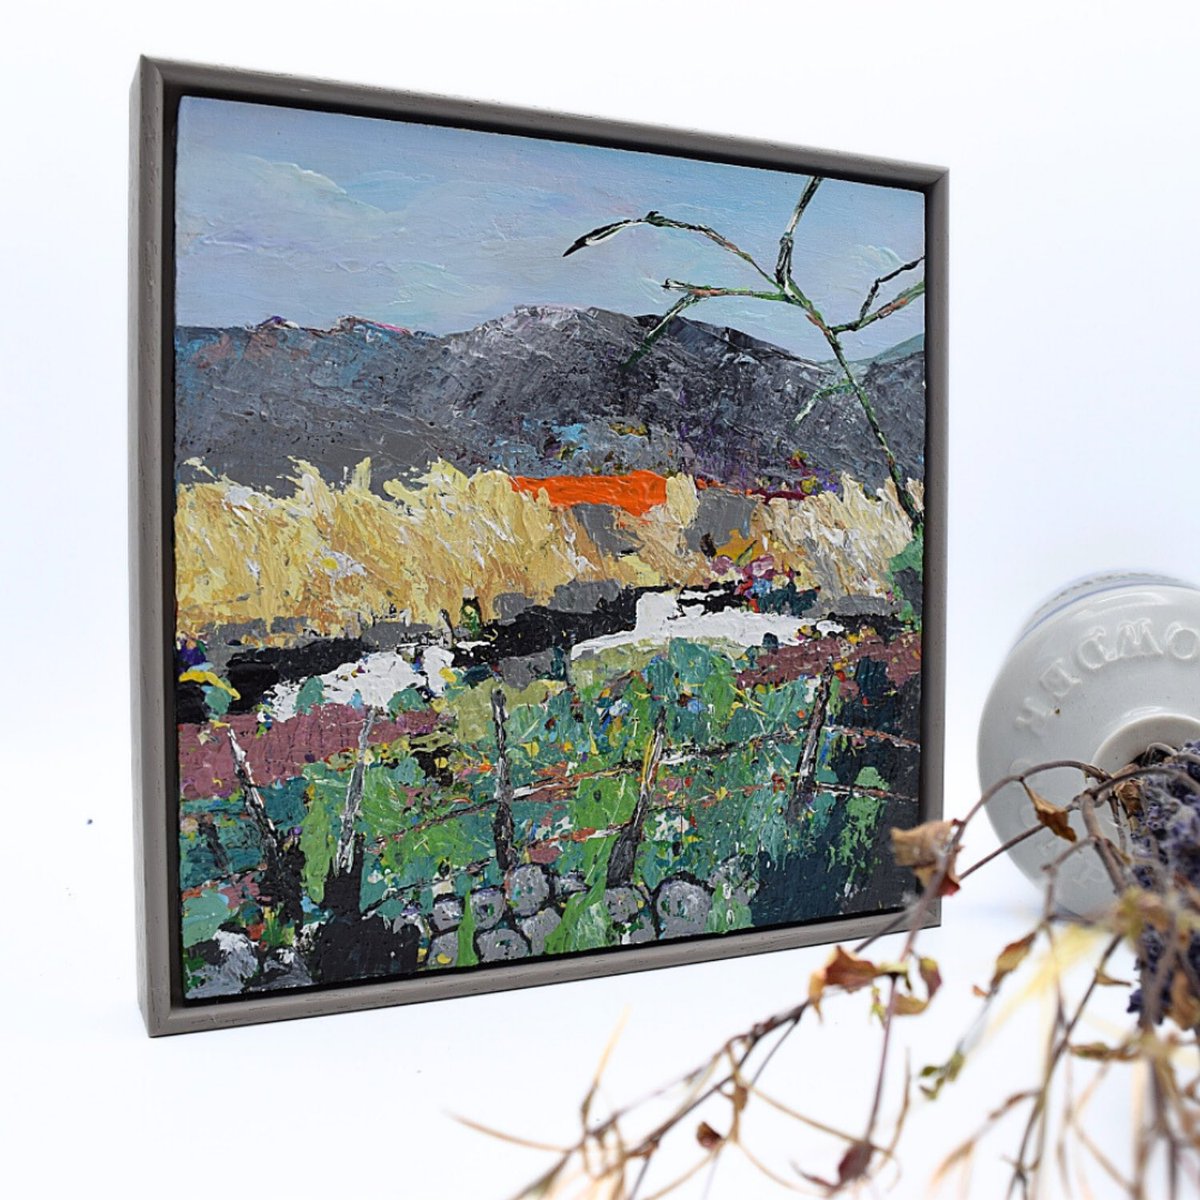 Hello! I’d like to share my framed #acrylicpainting today. #newonfolksy #art #scottishlandscape 

folksy.com/items/8335007-…